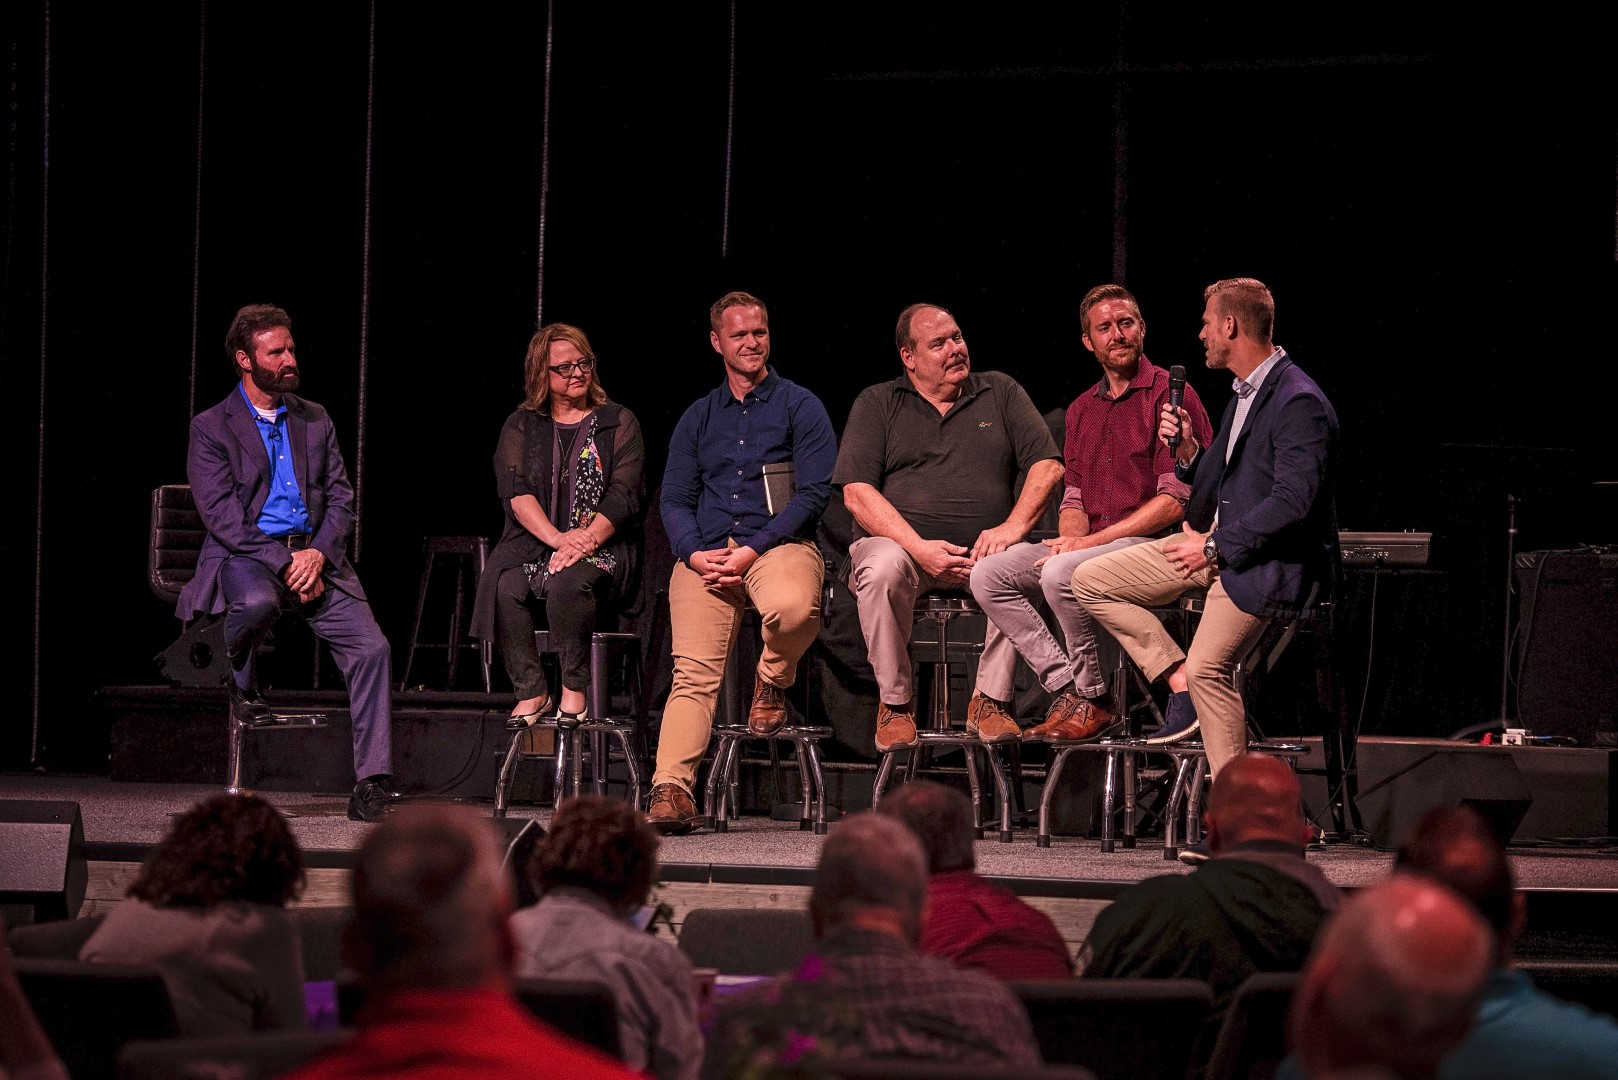 Left to right: Amy Willmann, Nehemiah Foundation; Paul Hemminger, StoryConnect; Kirk Lithander, Fairhaven Church; Caleb Ingram, Ohio Good Community; and Matt Jensen, National Christian Foundation.